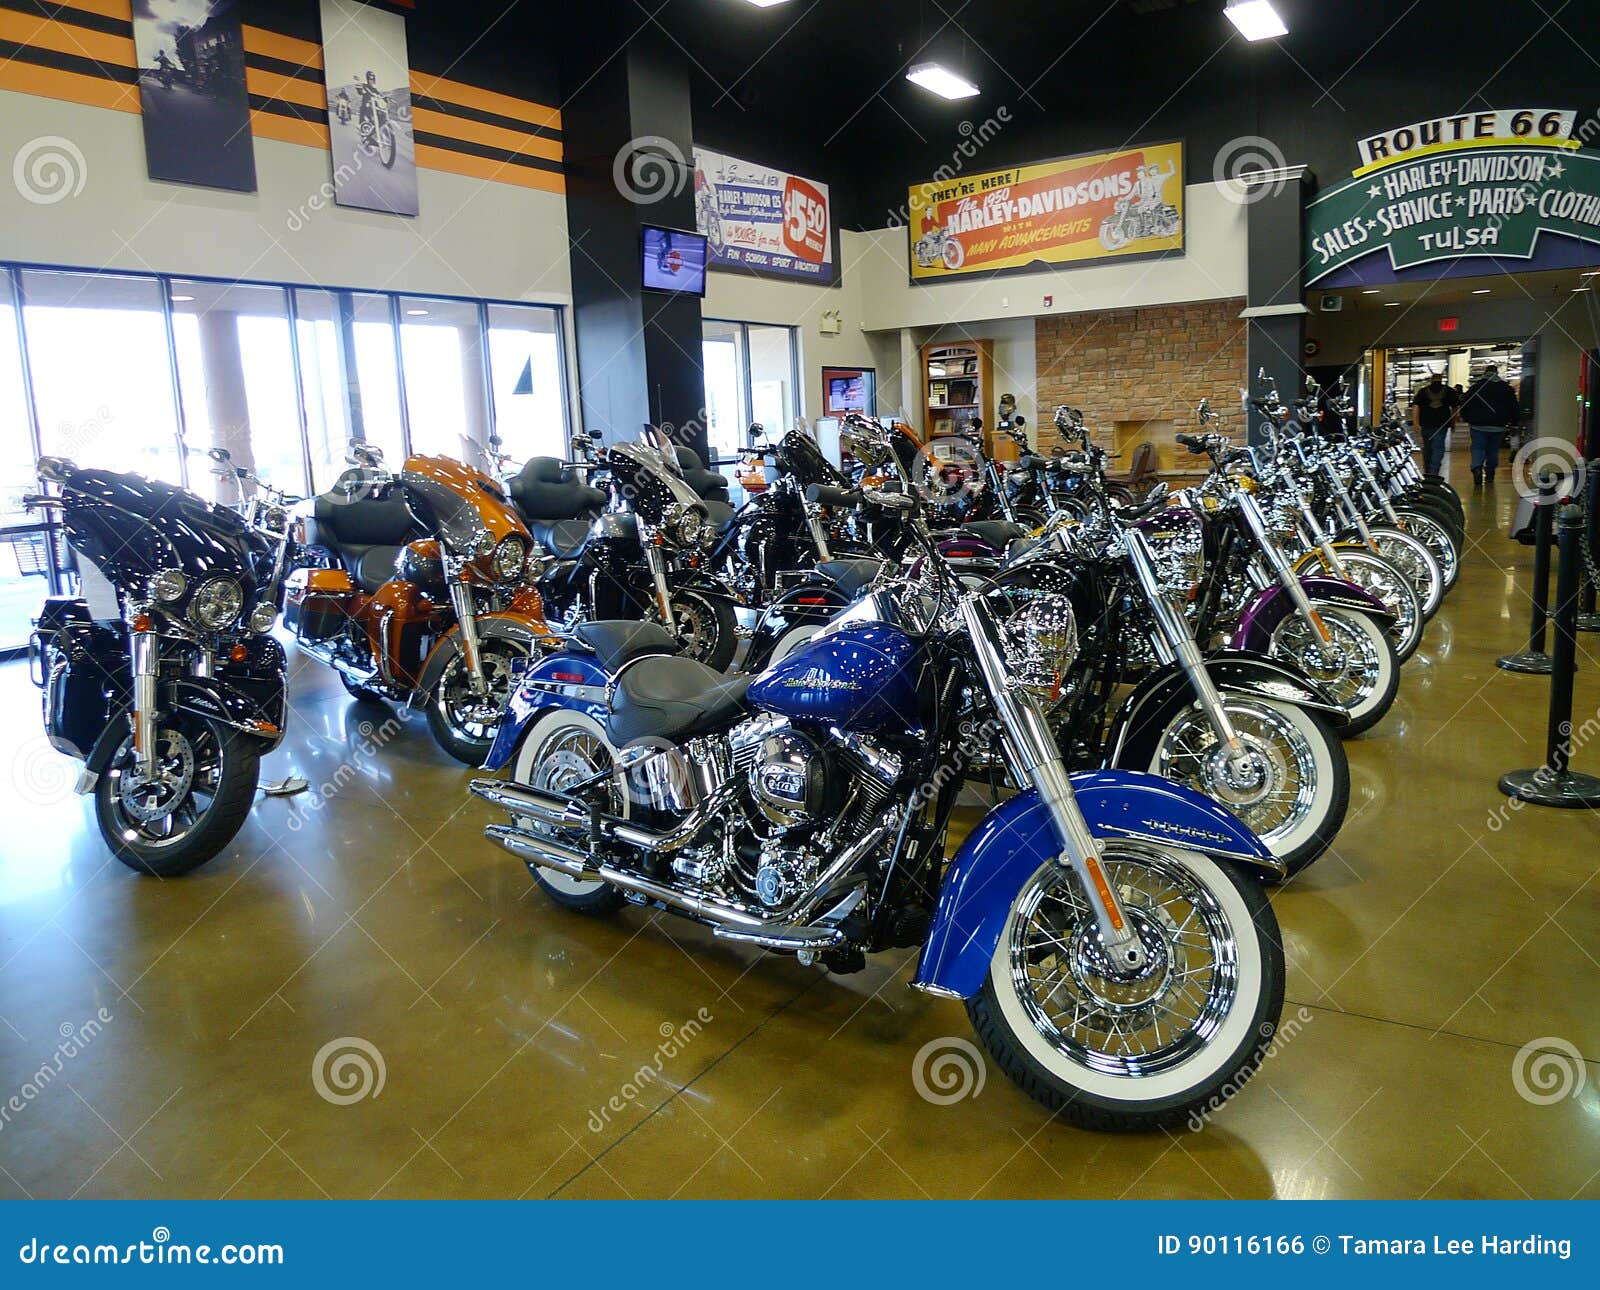 Route 66 Harley Davidson In Tulsa Oklahoma Neue Fahrrader Redaktionelles Foto Bild Von Fahrrad Fahrt 90116166